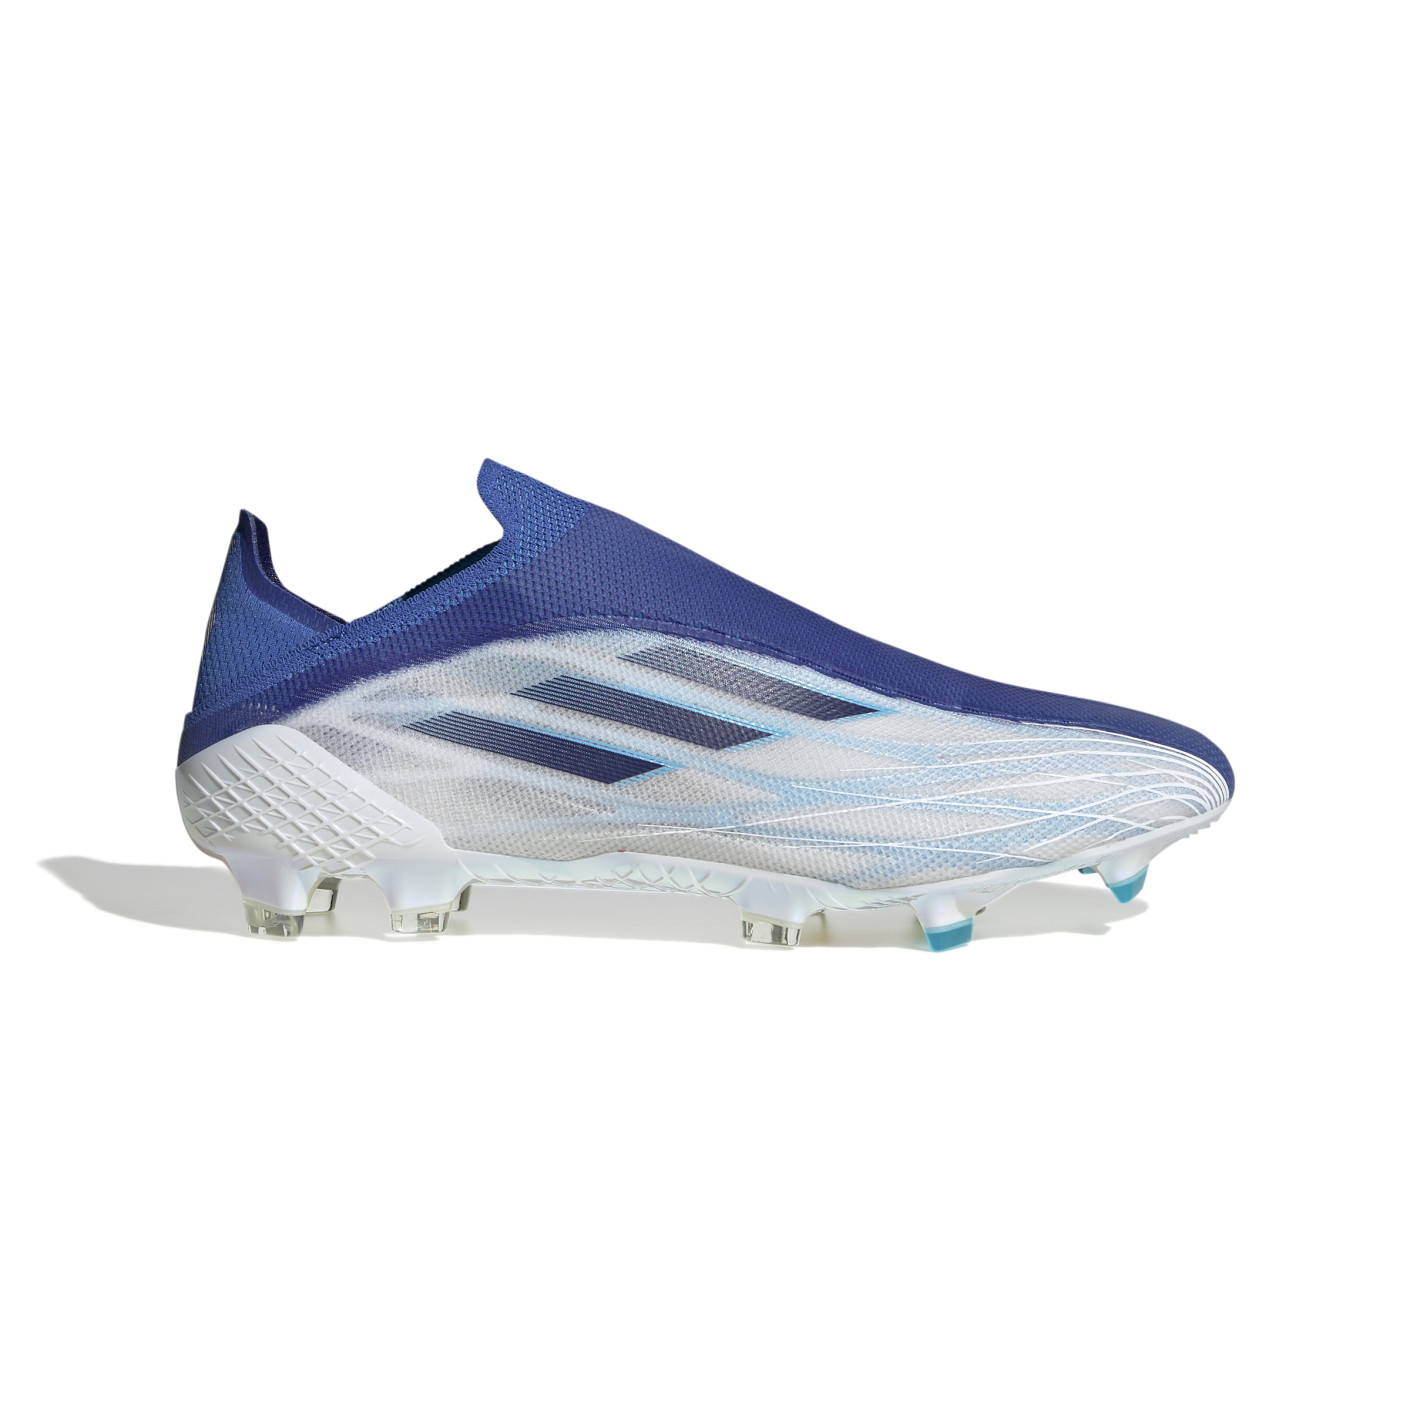 versnelling vergeetachtig Populair adidas X Speedflow+ Gras Voetbalschoenen (FG) Wit Blauw